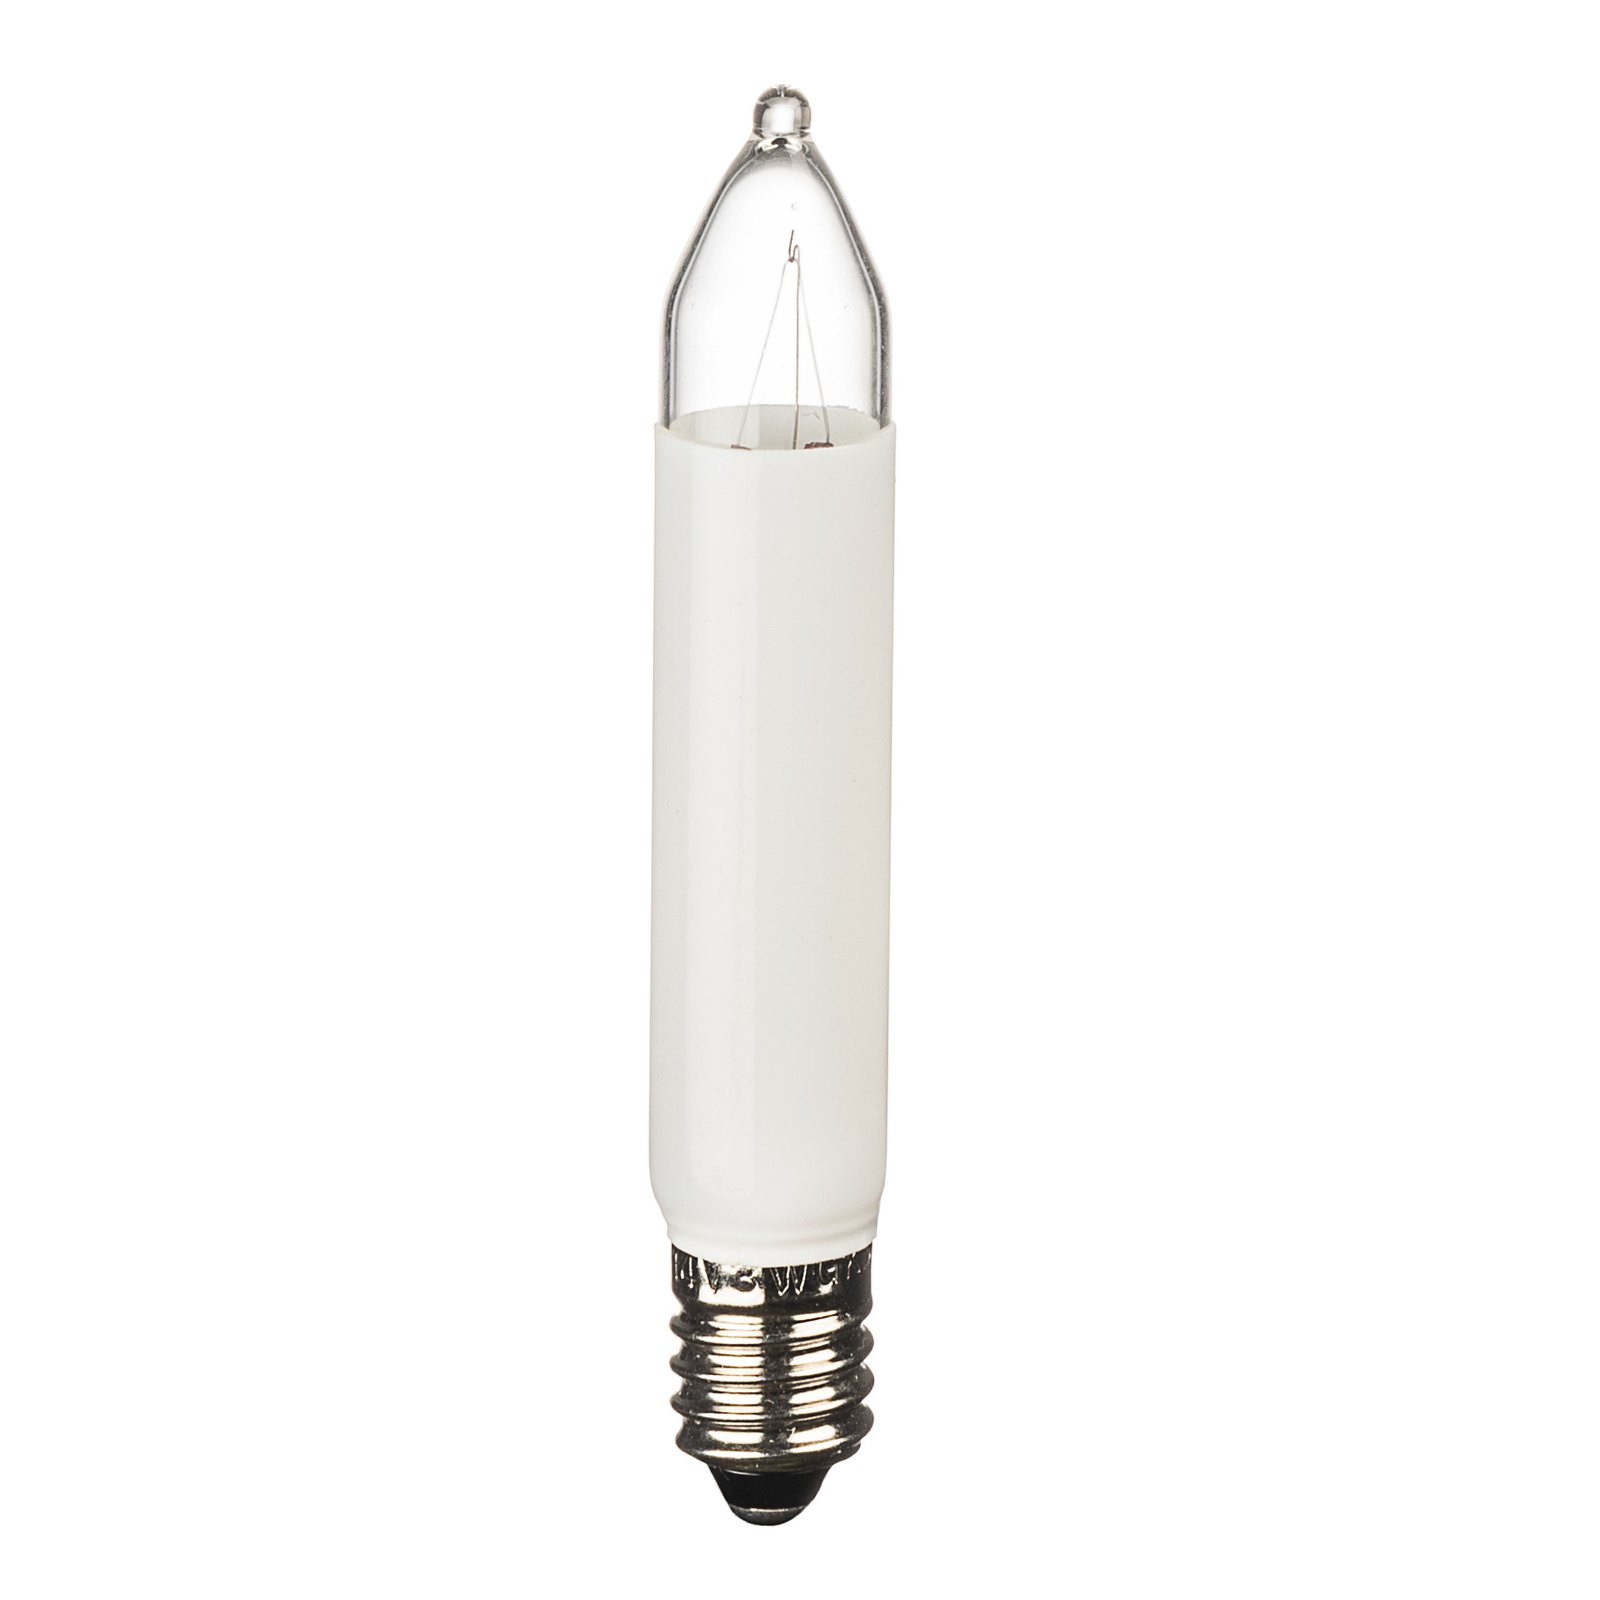 E10 3 W 23 V spare Xmas tree bulbs, pack of 2